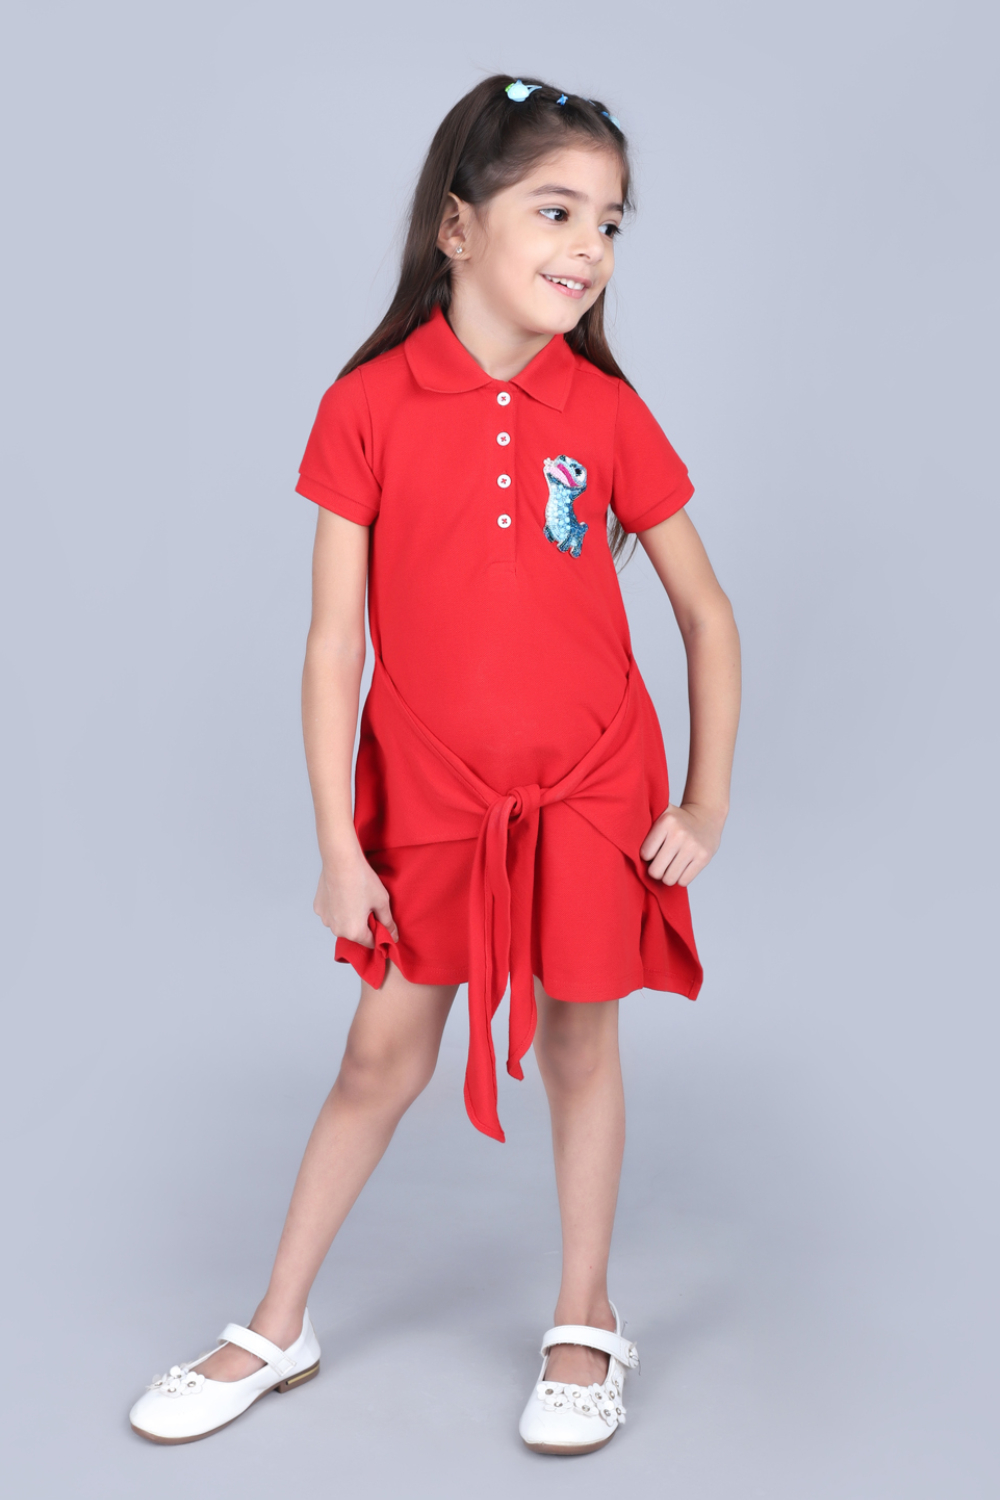 Girls Polo Dress With Baby Dinosaur Hand Embellishment 